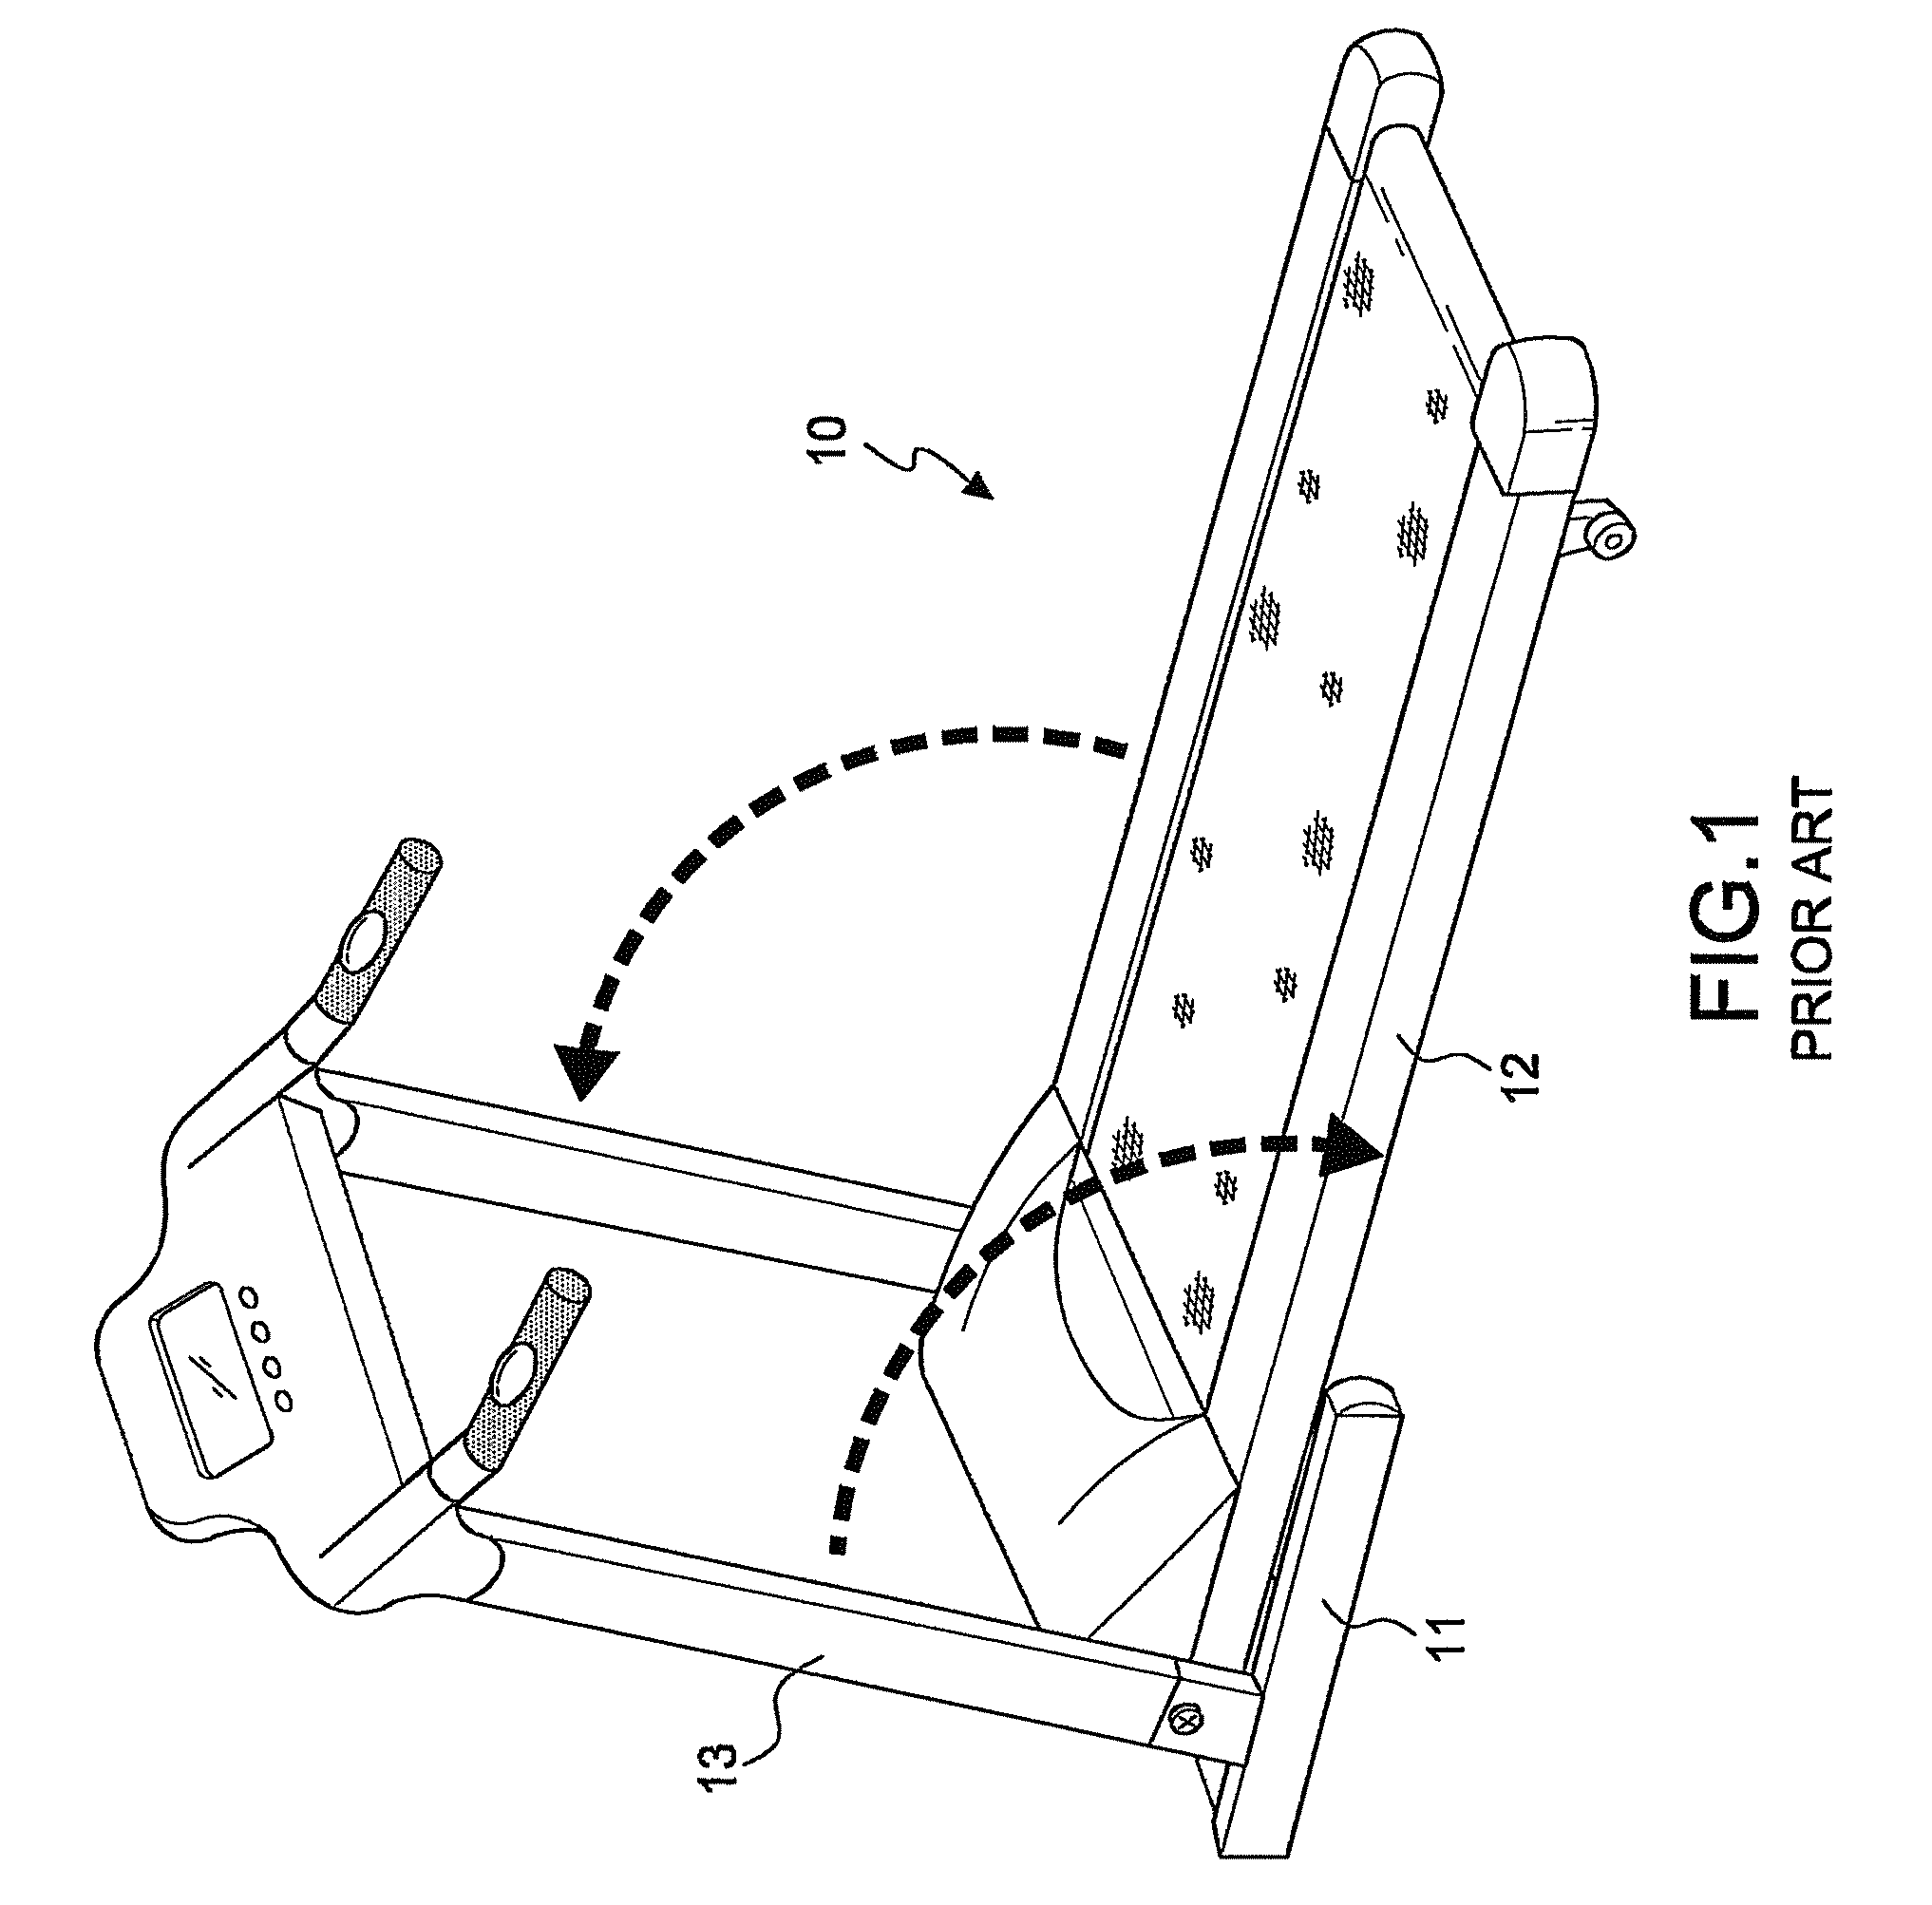 Treadmill foldable into a chair